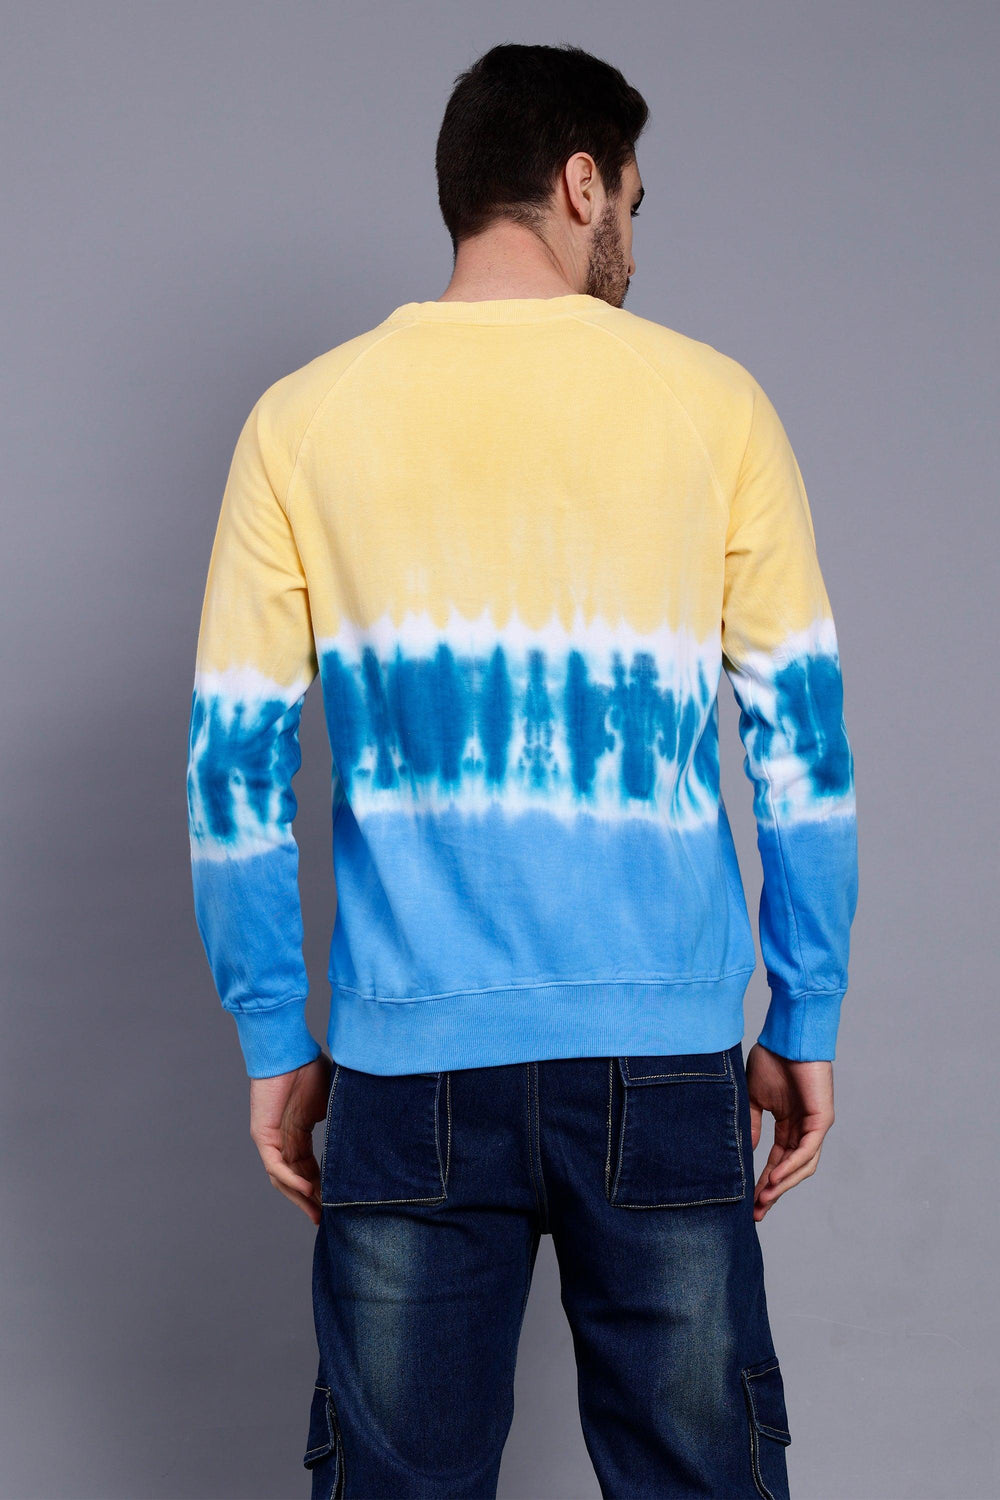 Regular Fit Multi-Color Premium Sweatshirt For Men - Peplos Jeans 